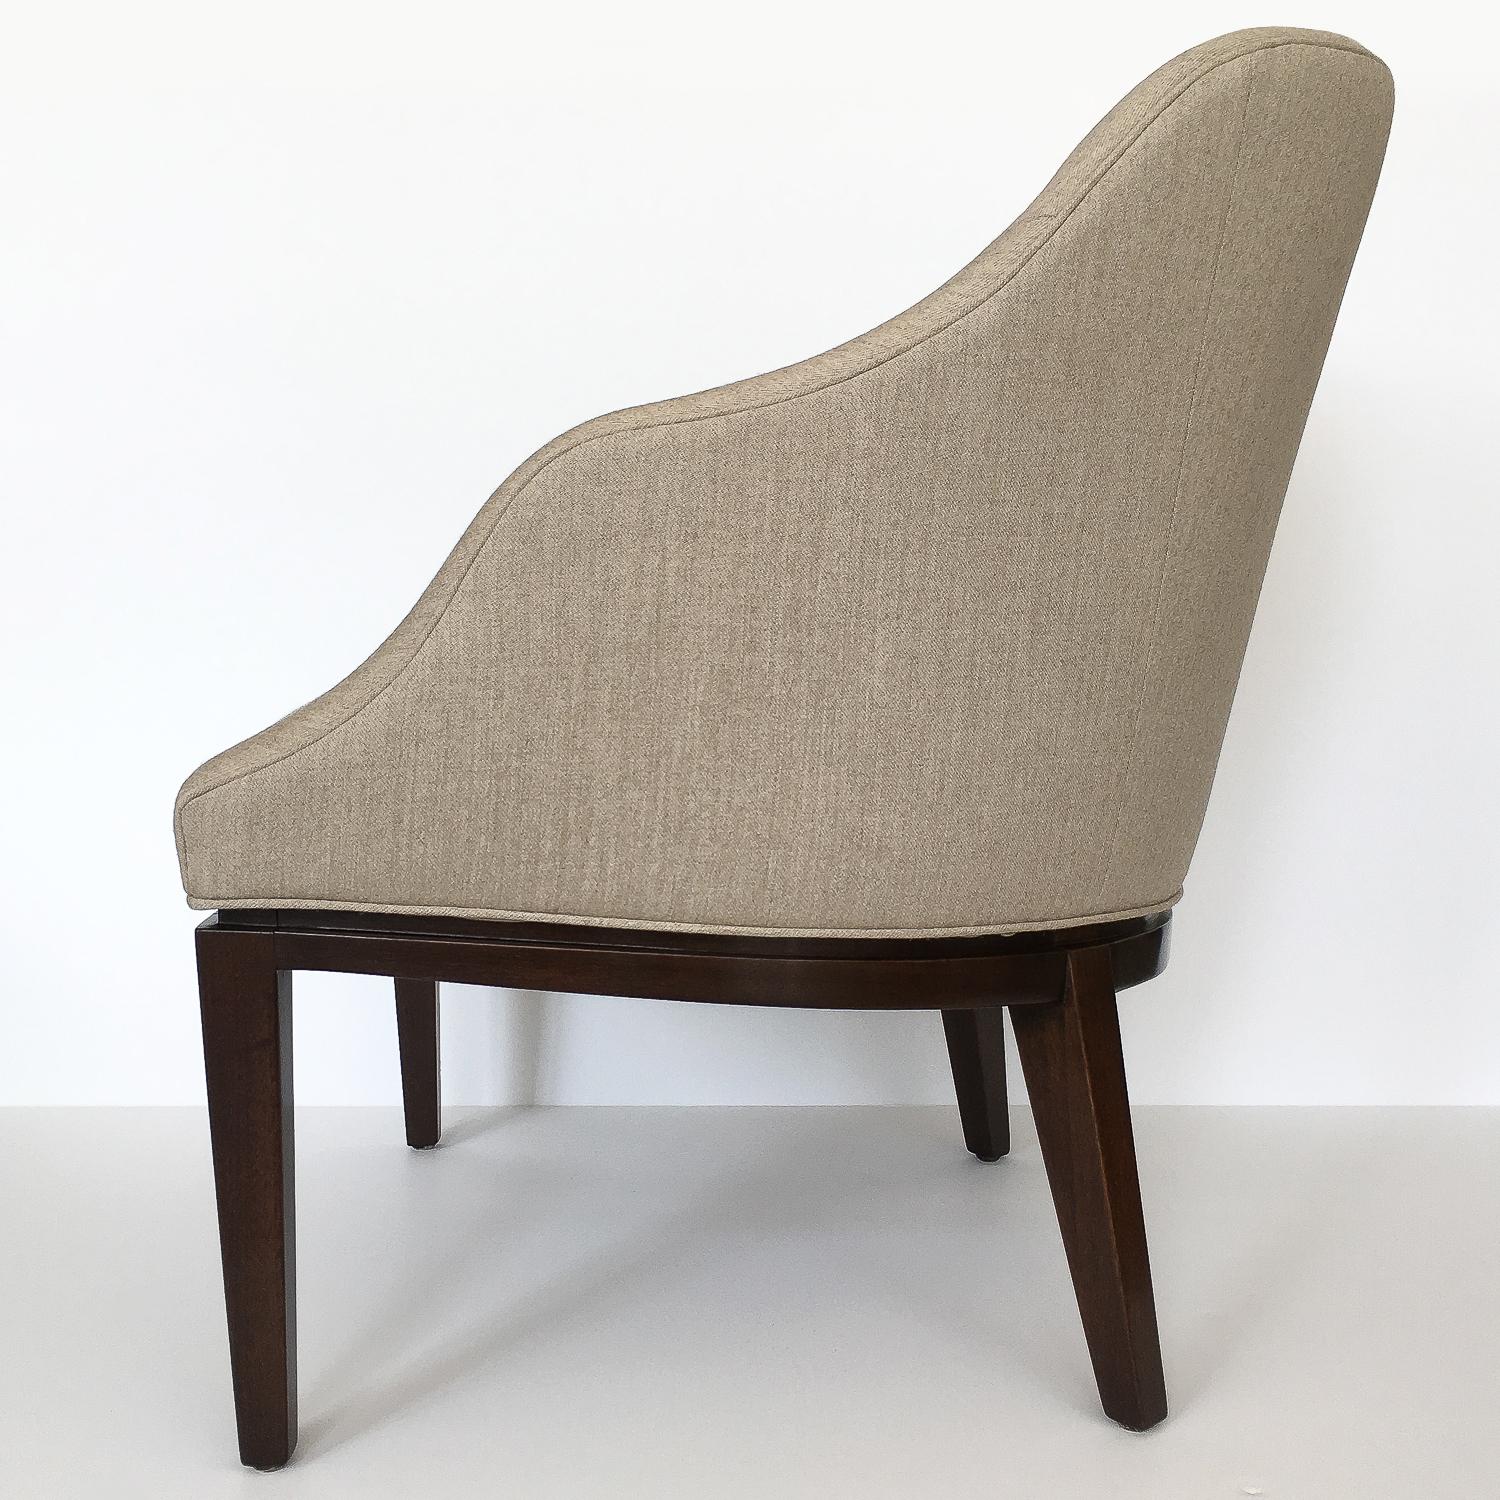 Mid-20th Century Edward Wormley Lounge Chair for Dunbar